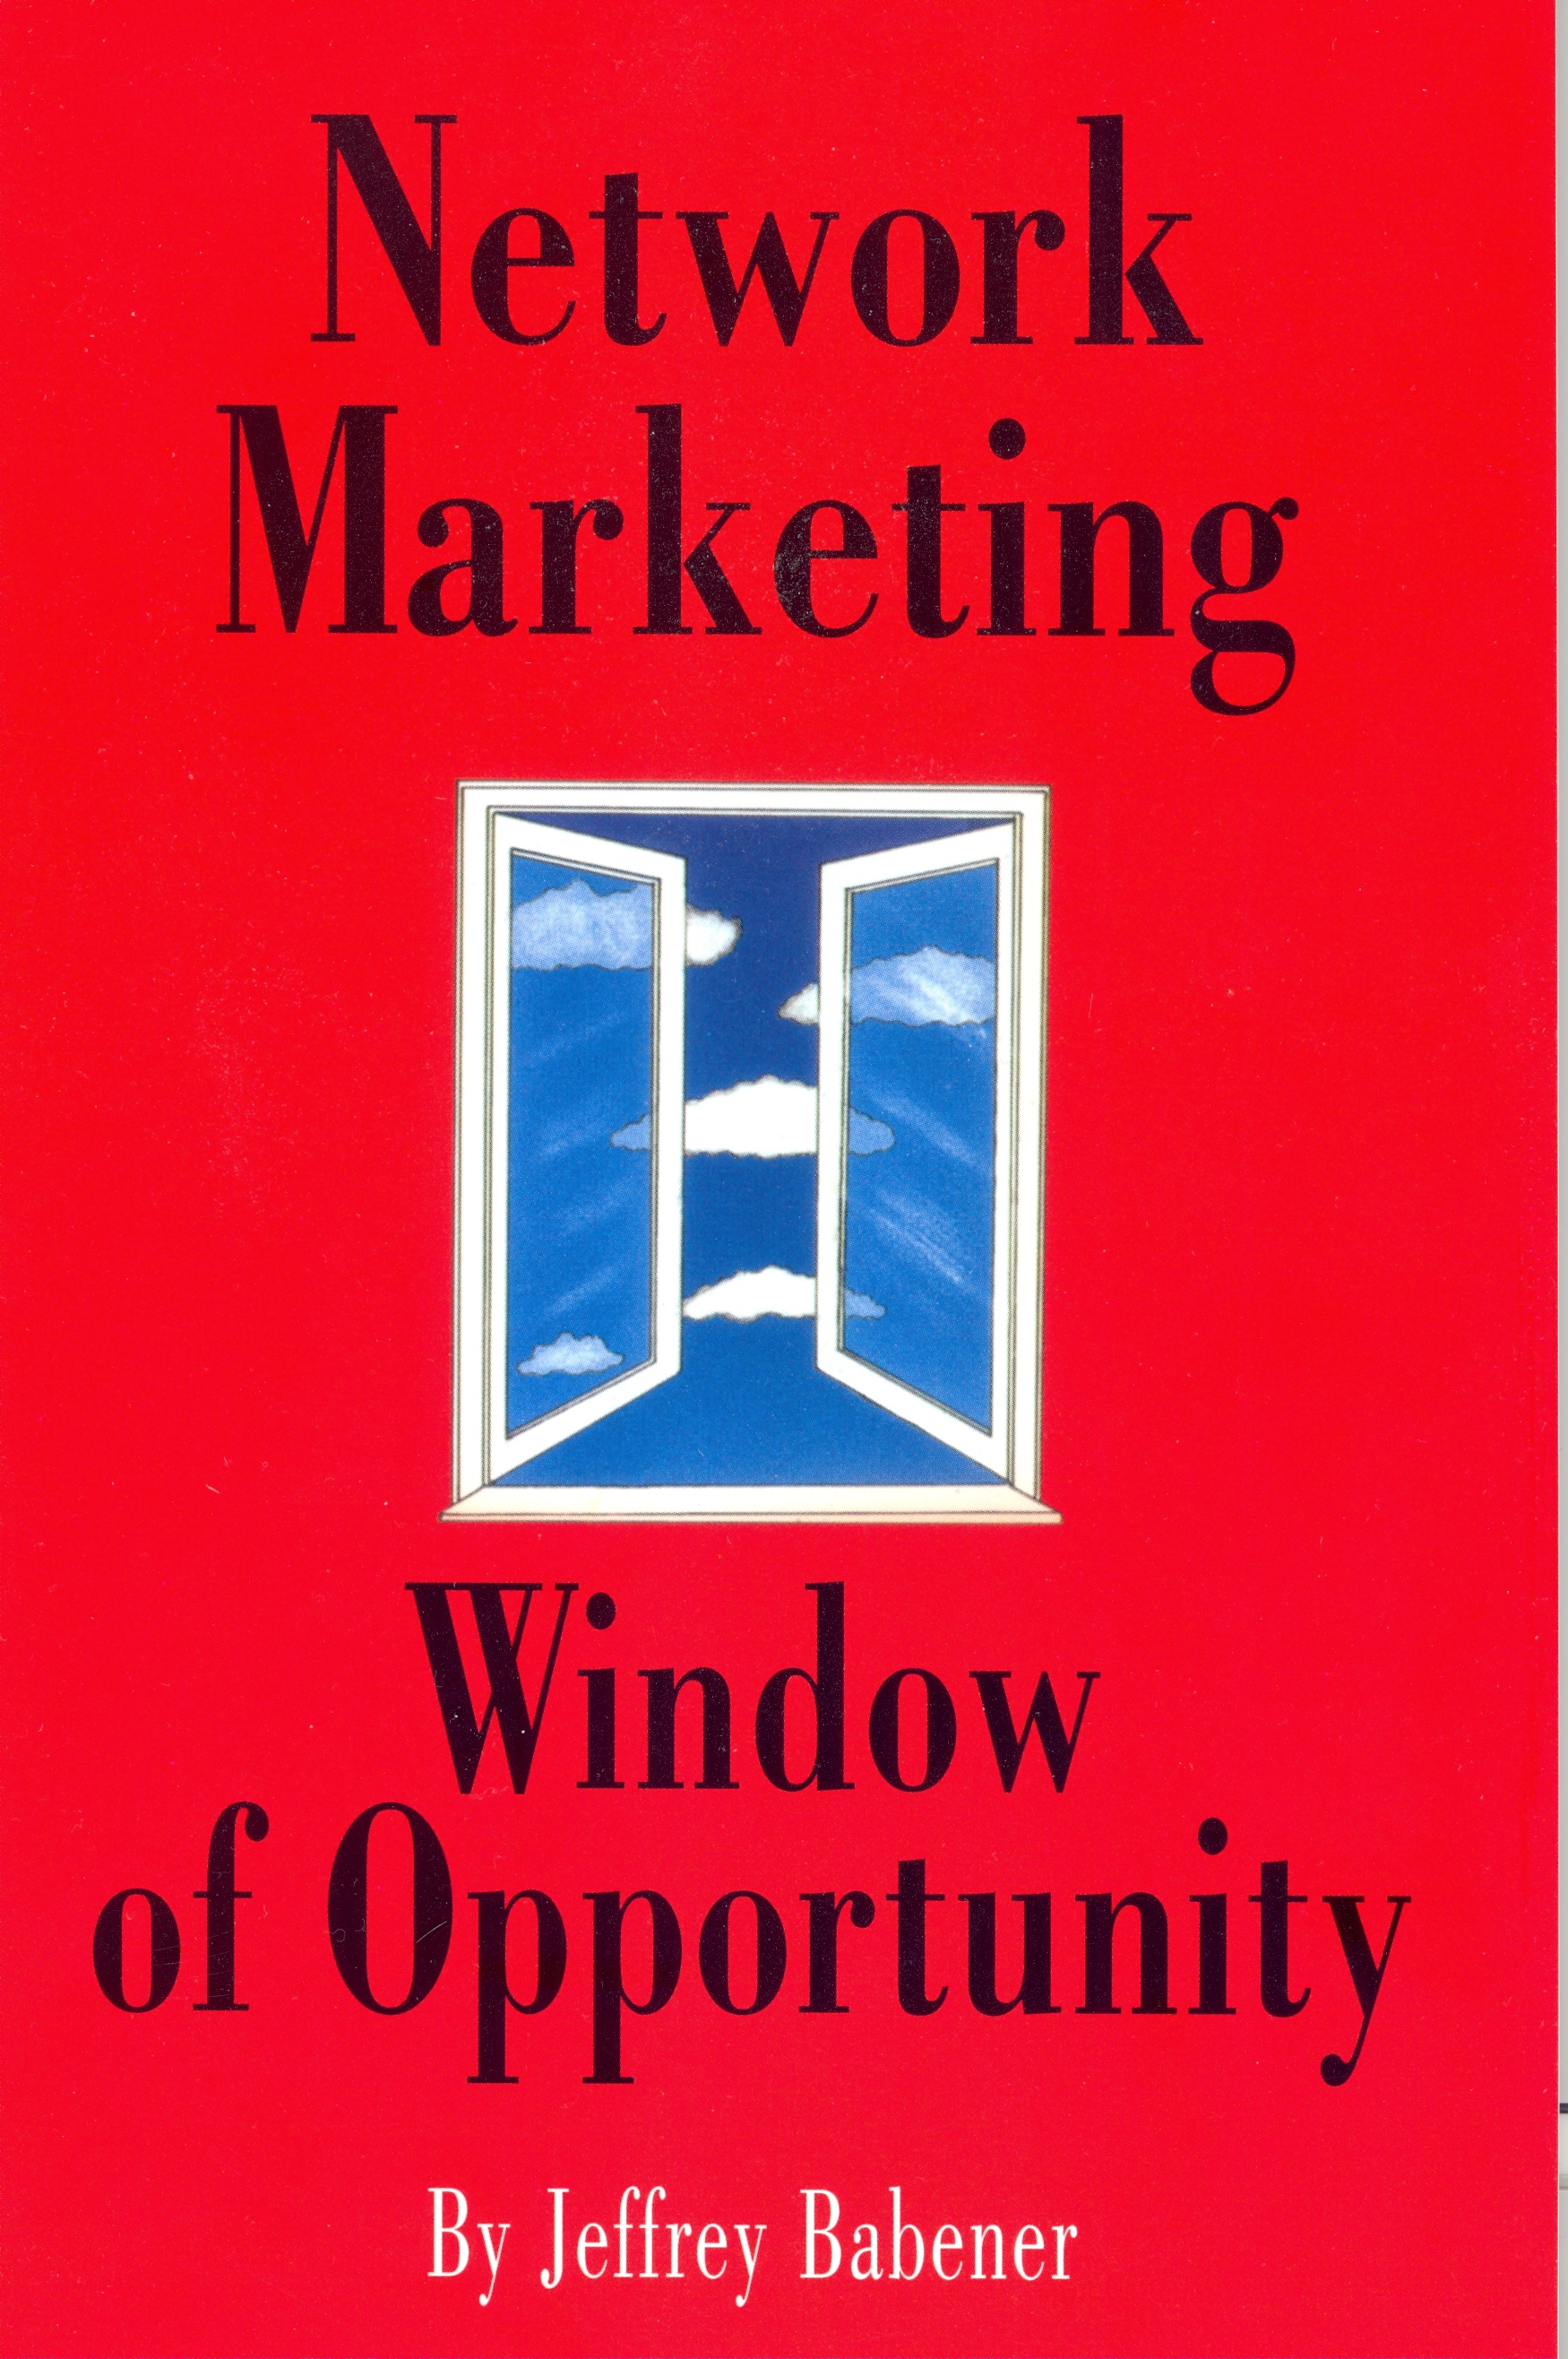 Network Marketing: Window of Opportunity